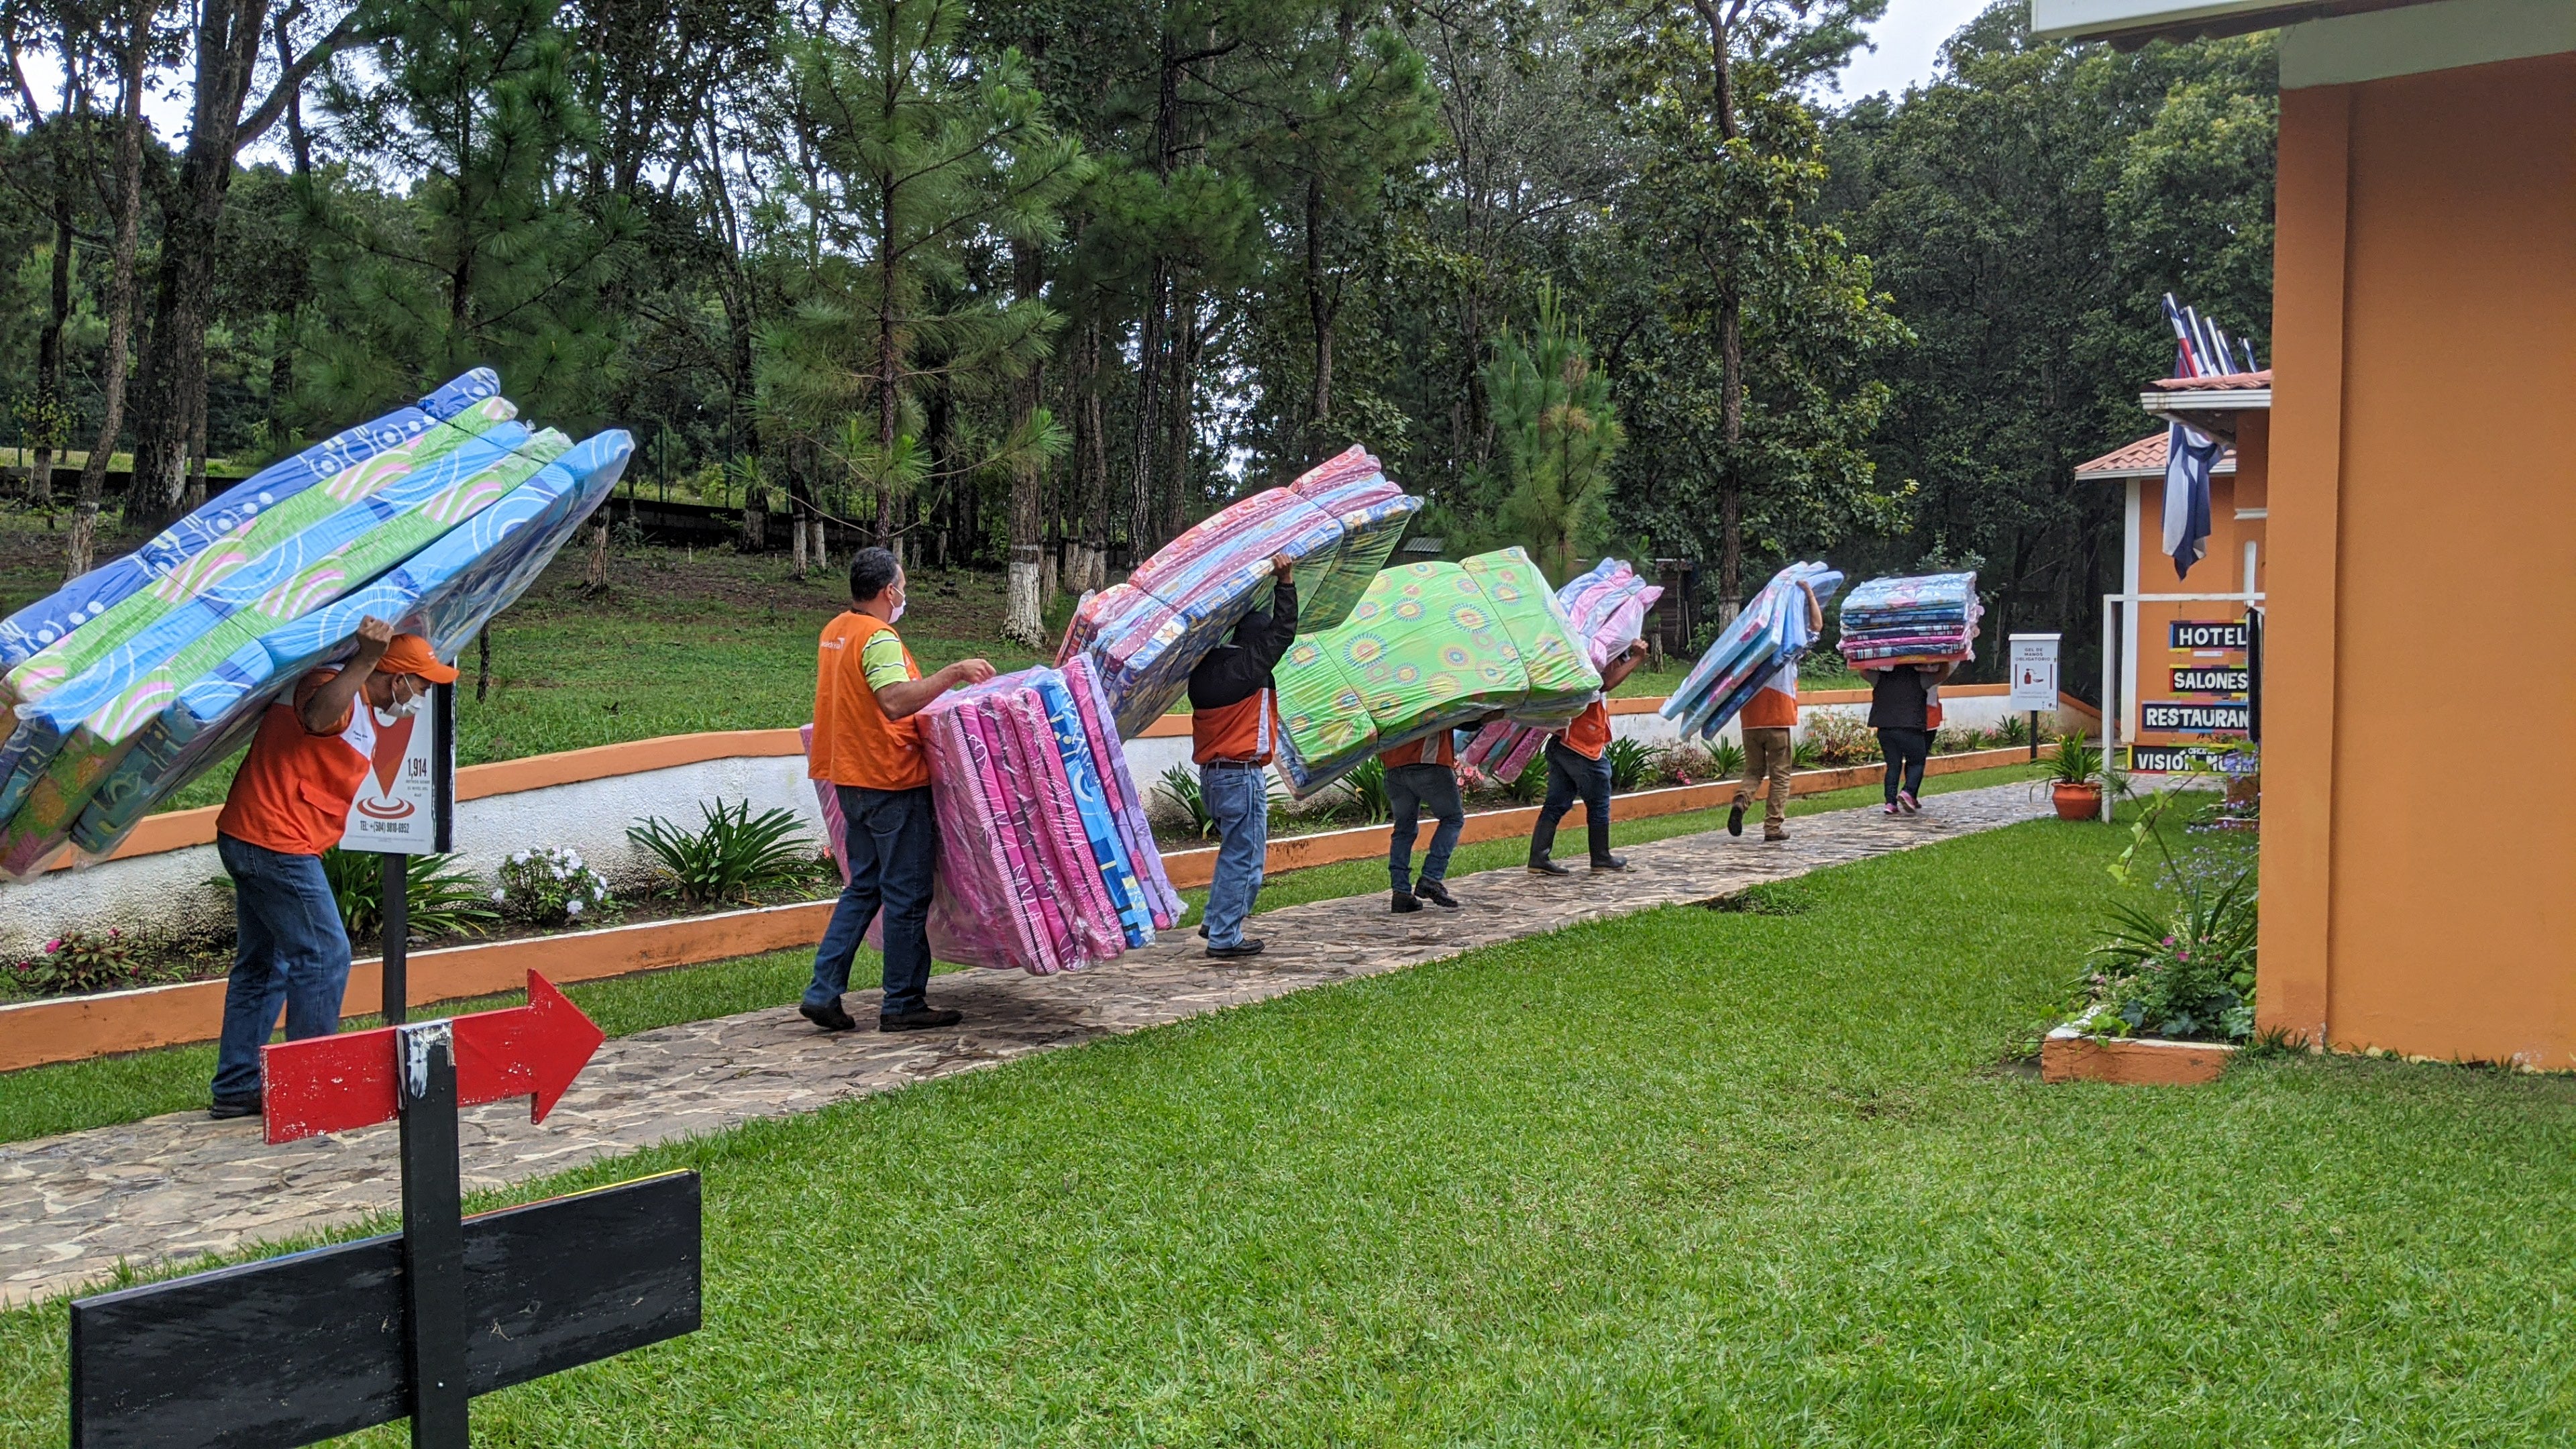 Staff & volunteers distribute mattresses, ensuring children are not sleeping on the ground